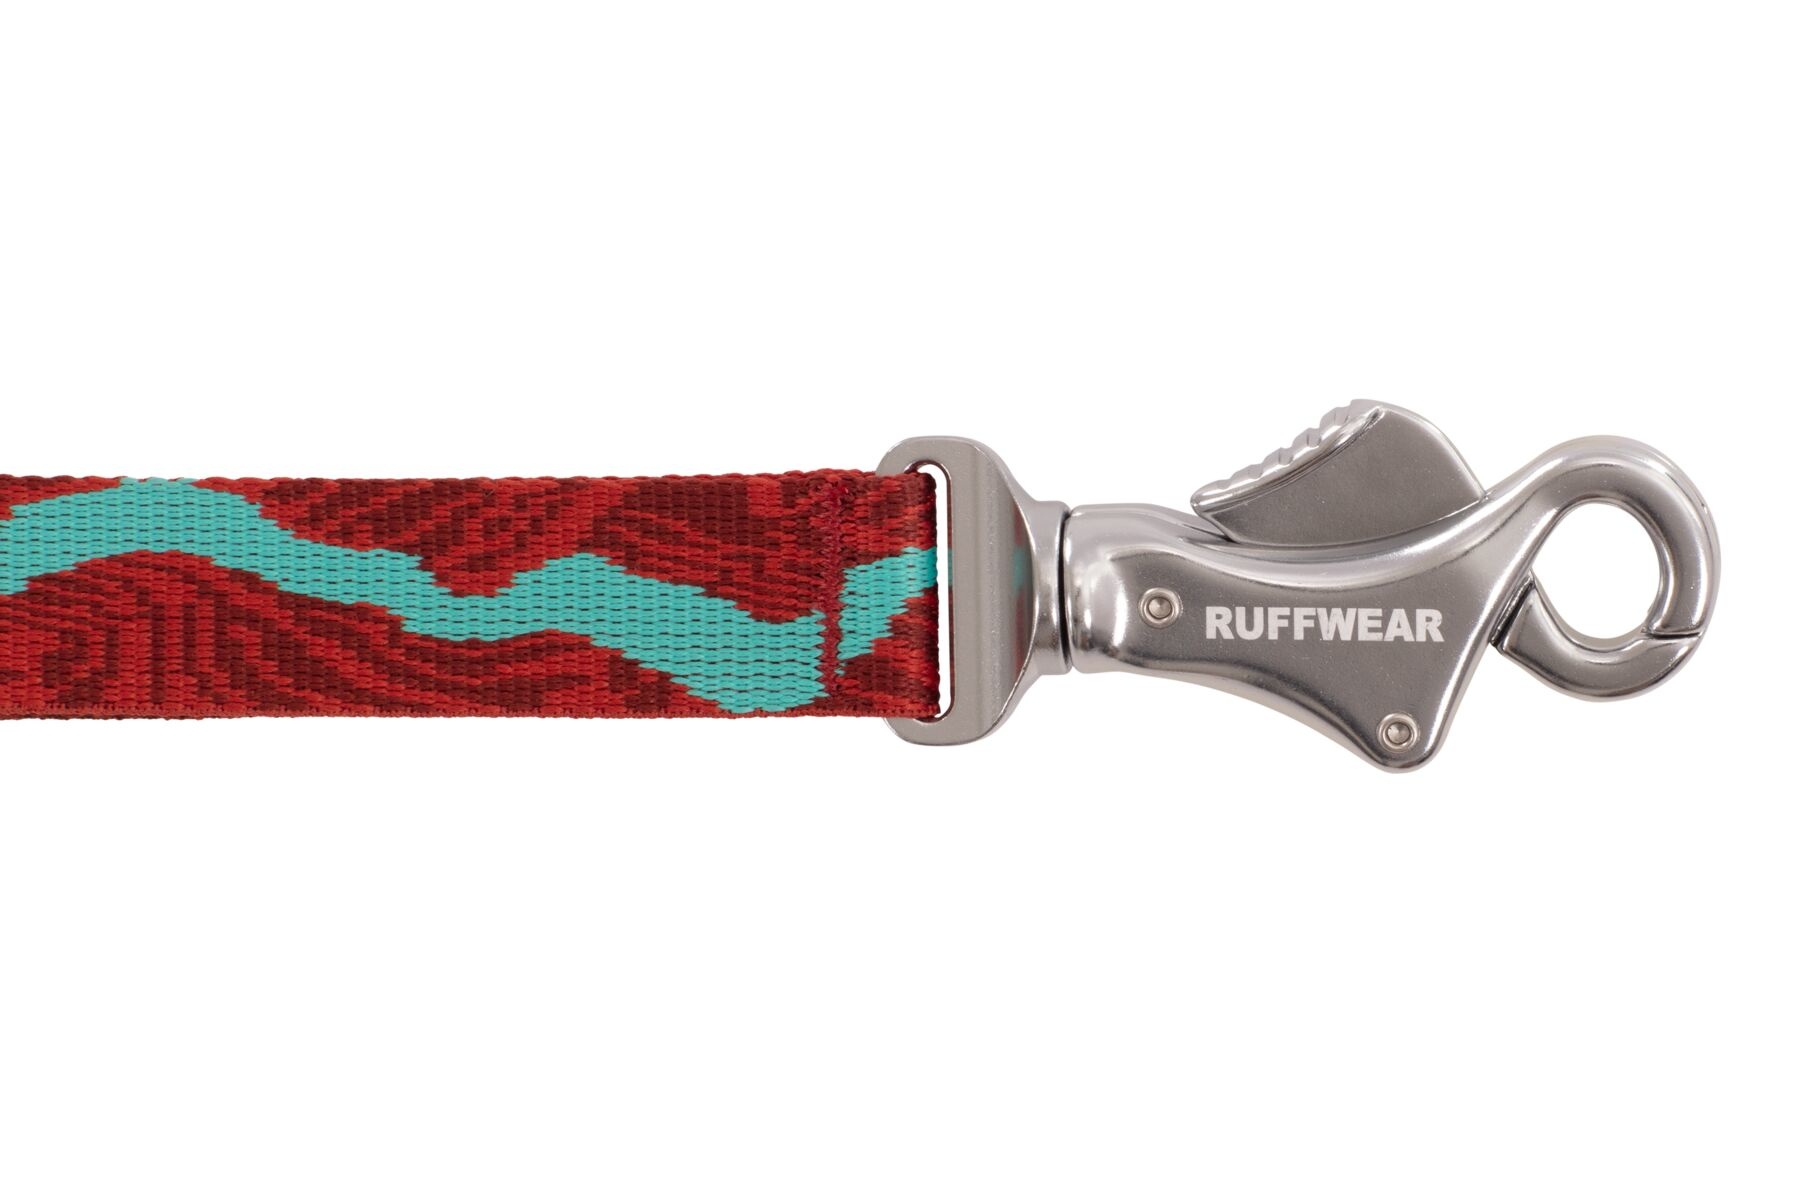 Ruffwear Ruffwear - Flat Out Leash Colorado River